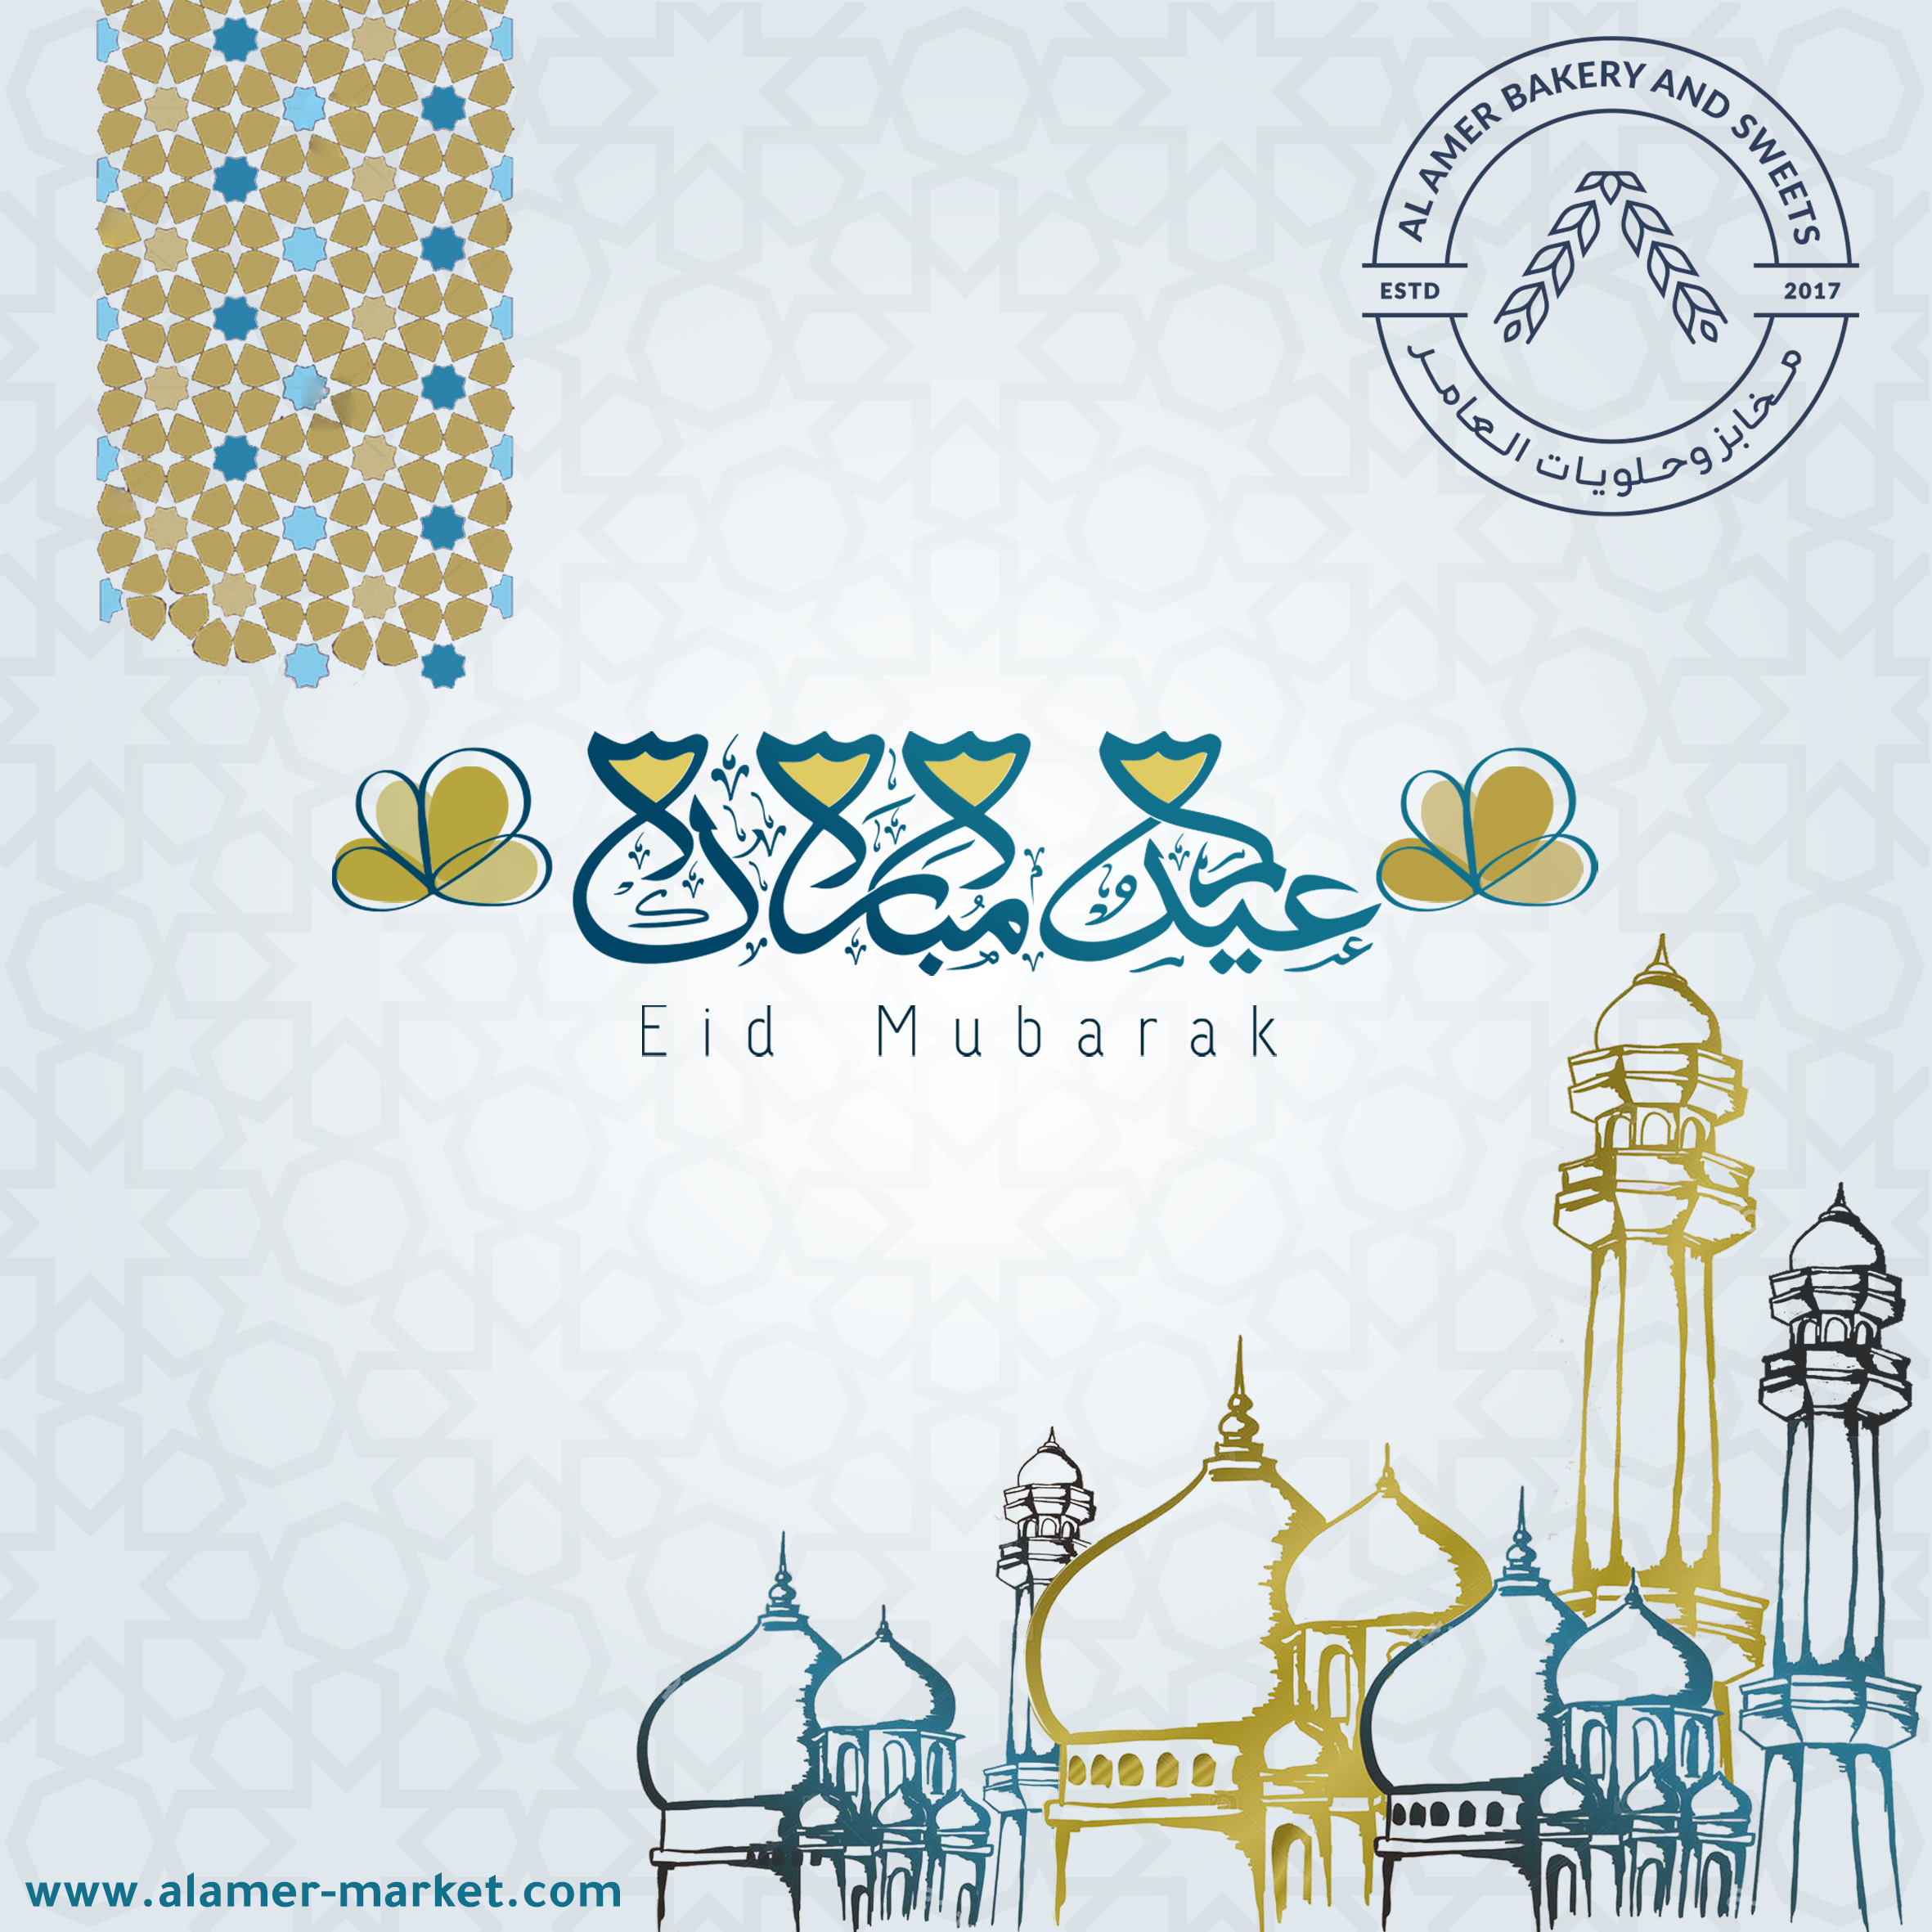 Alamer_Image/Greeting/BK-Eid_2020_.png